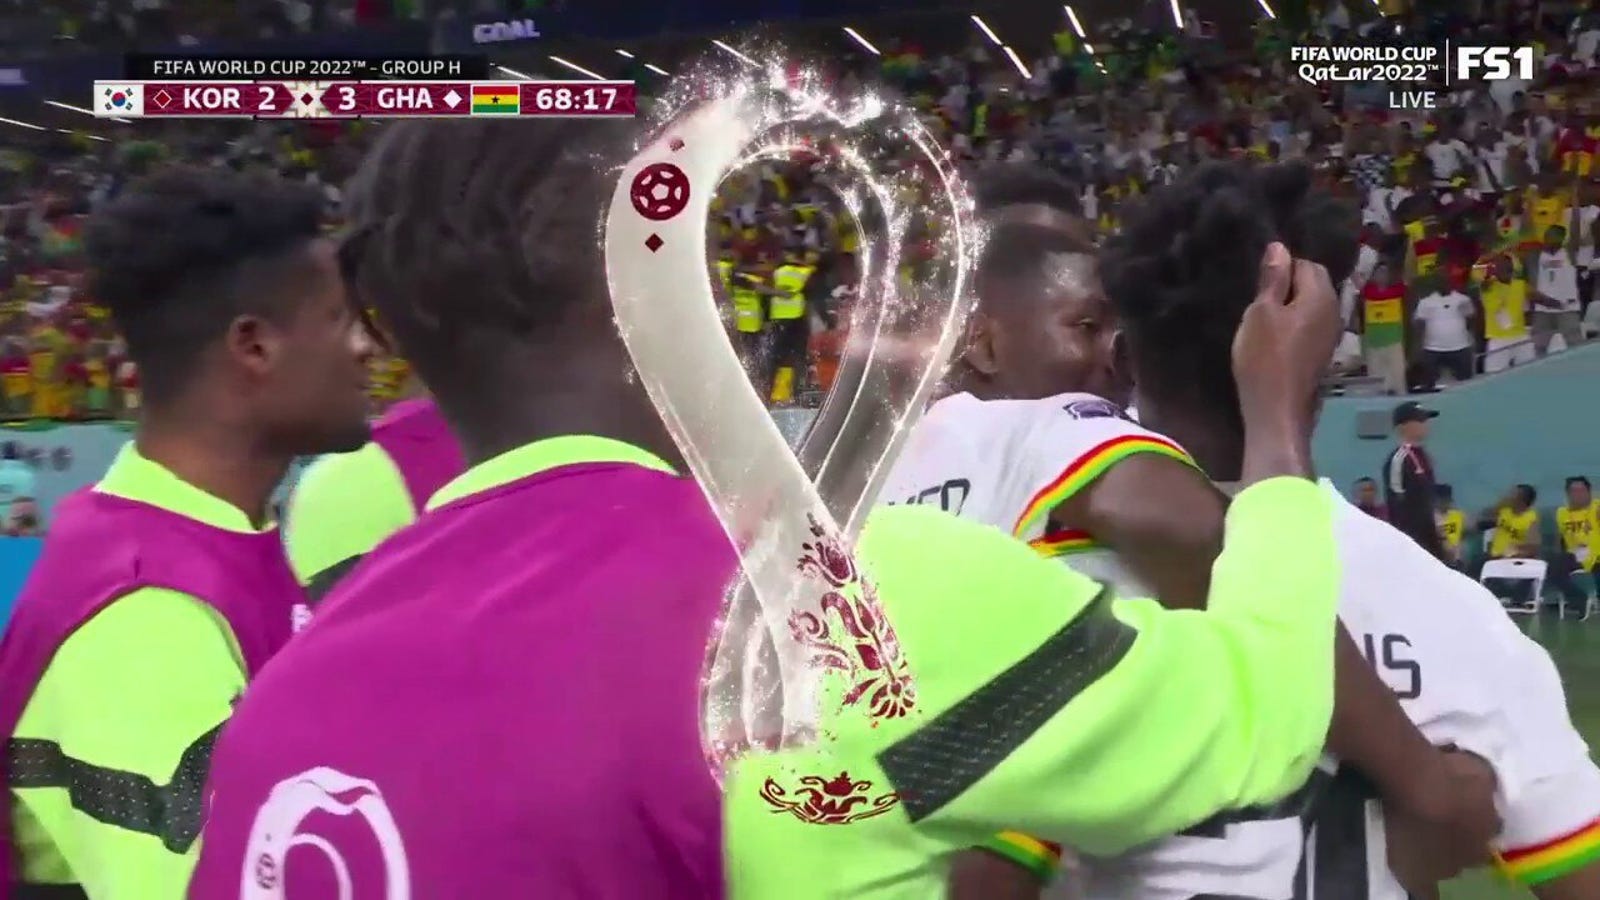 Ghana's Mohamed Kudus scores 68th minute goal against South Korea | 2022 FIFA World Cup